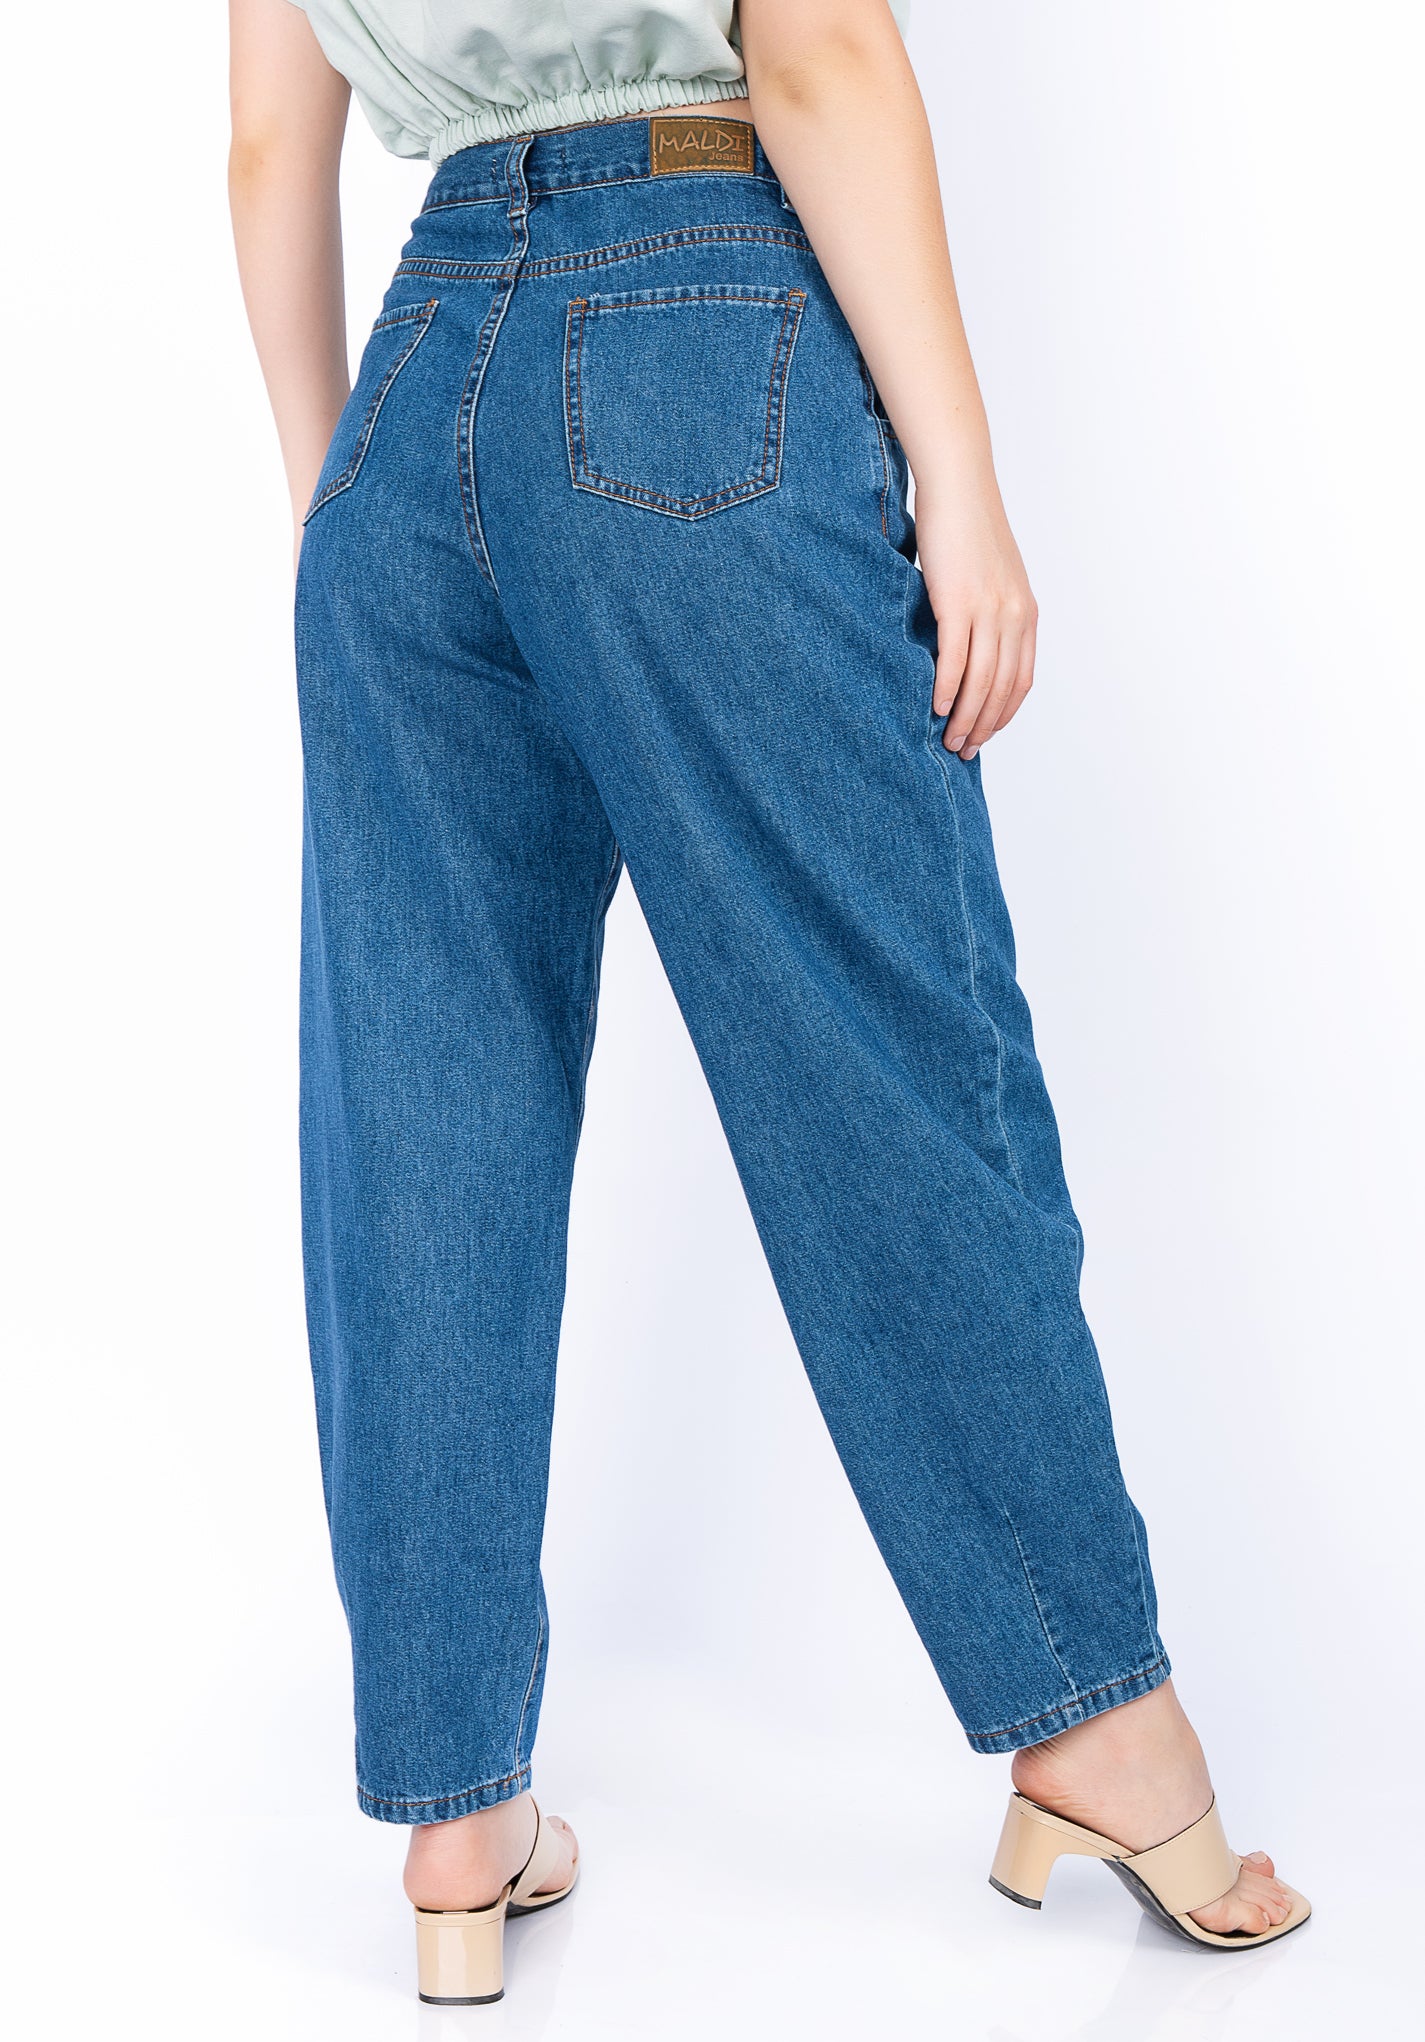 Pantalon Jean Mujer Slouchy Azul Talla 30